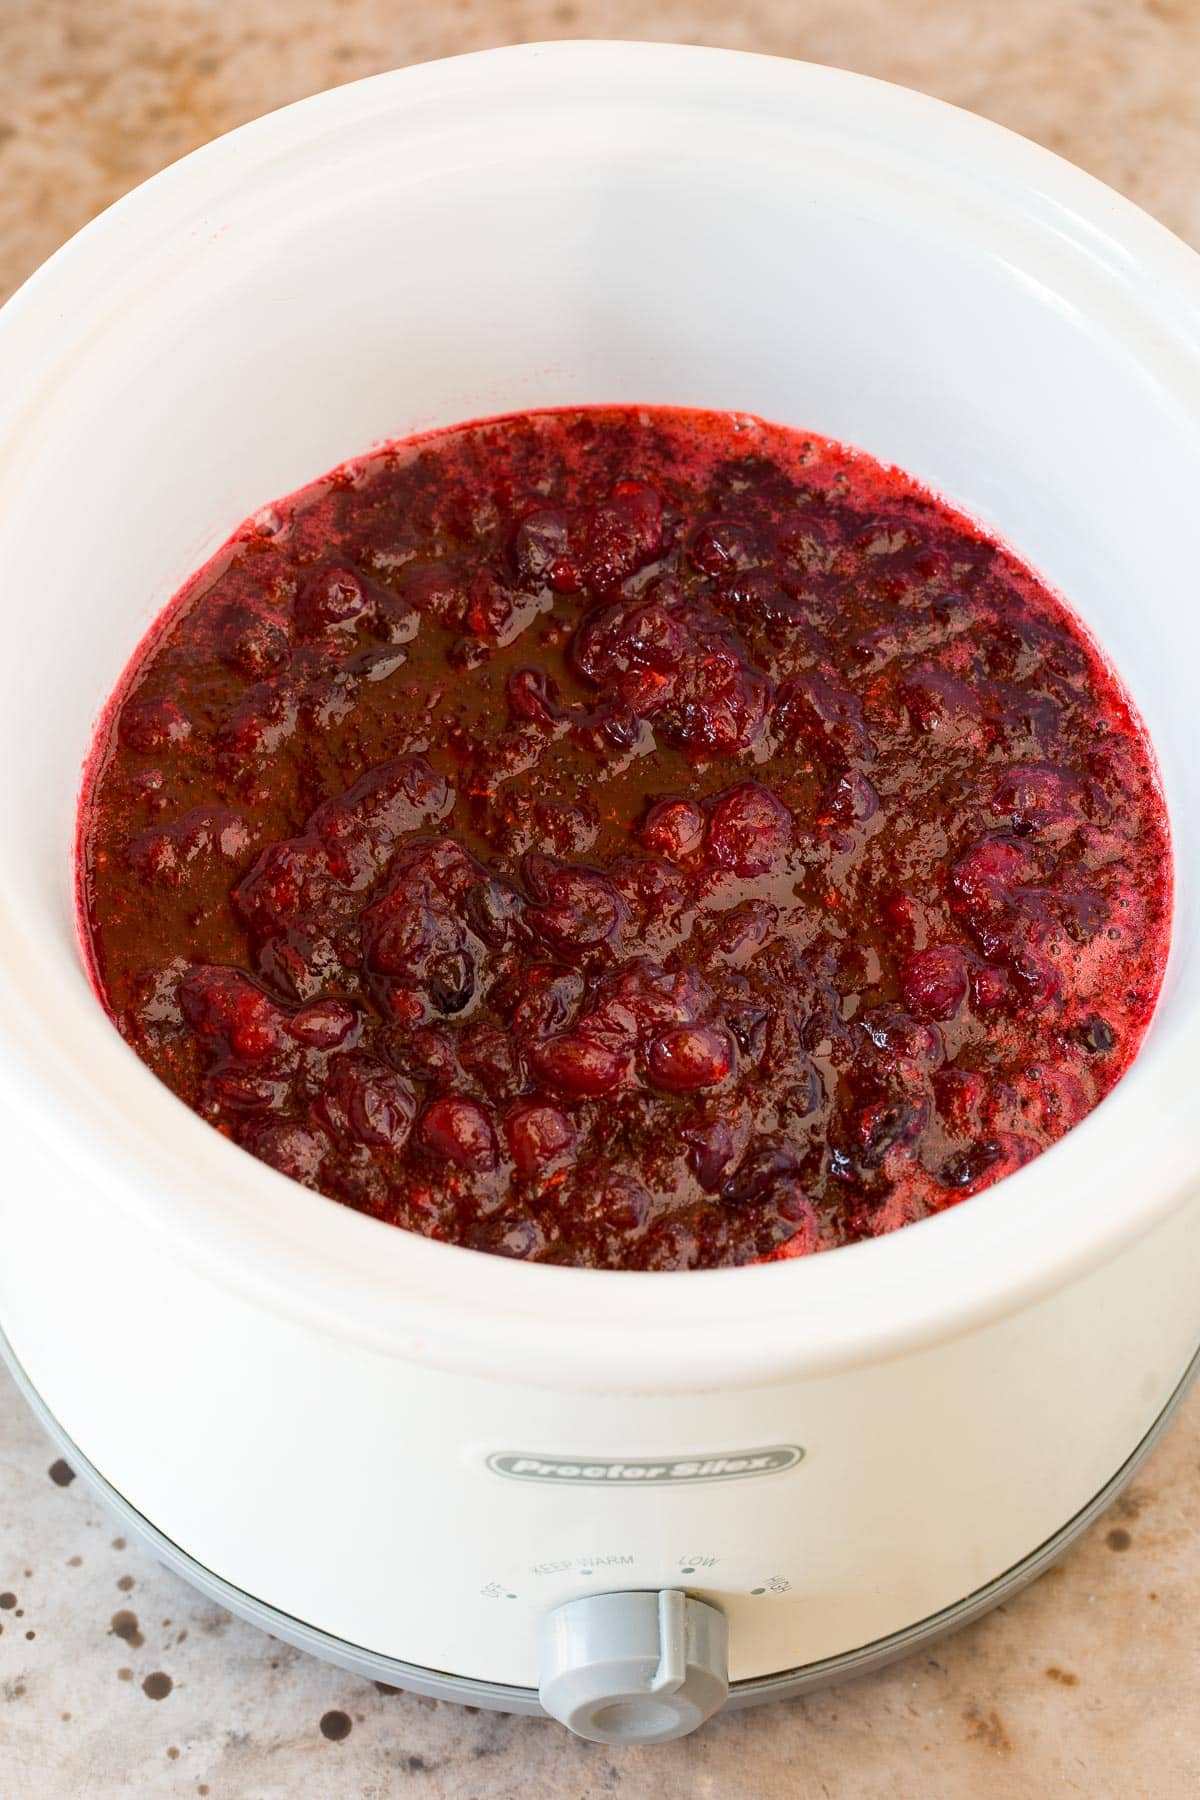 Cranberry sauce inside a crock pot.